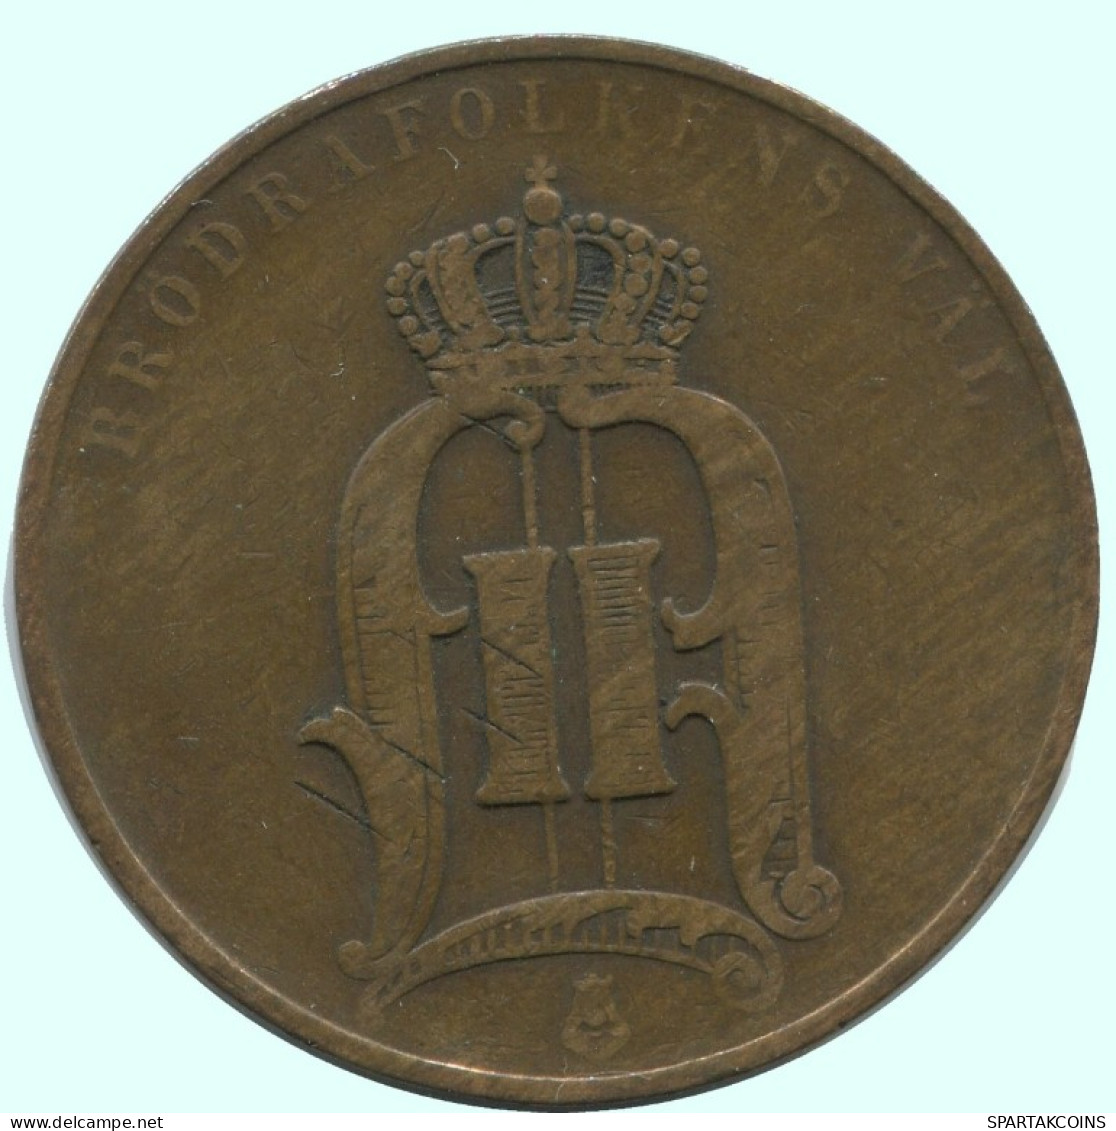 5 ORE 1889 SWEDEN Coin #AC633.2.U.A - Sweden